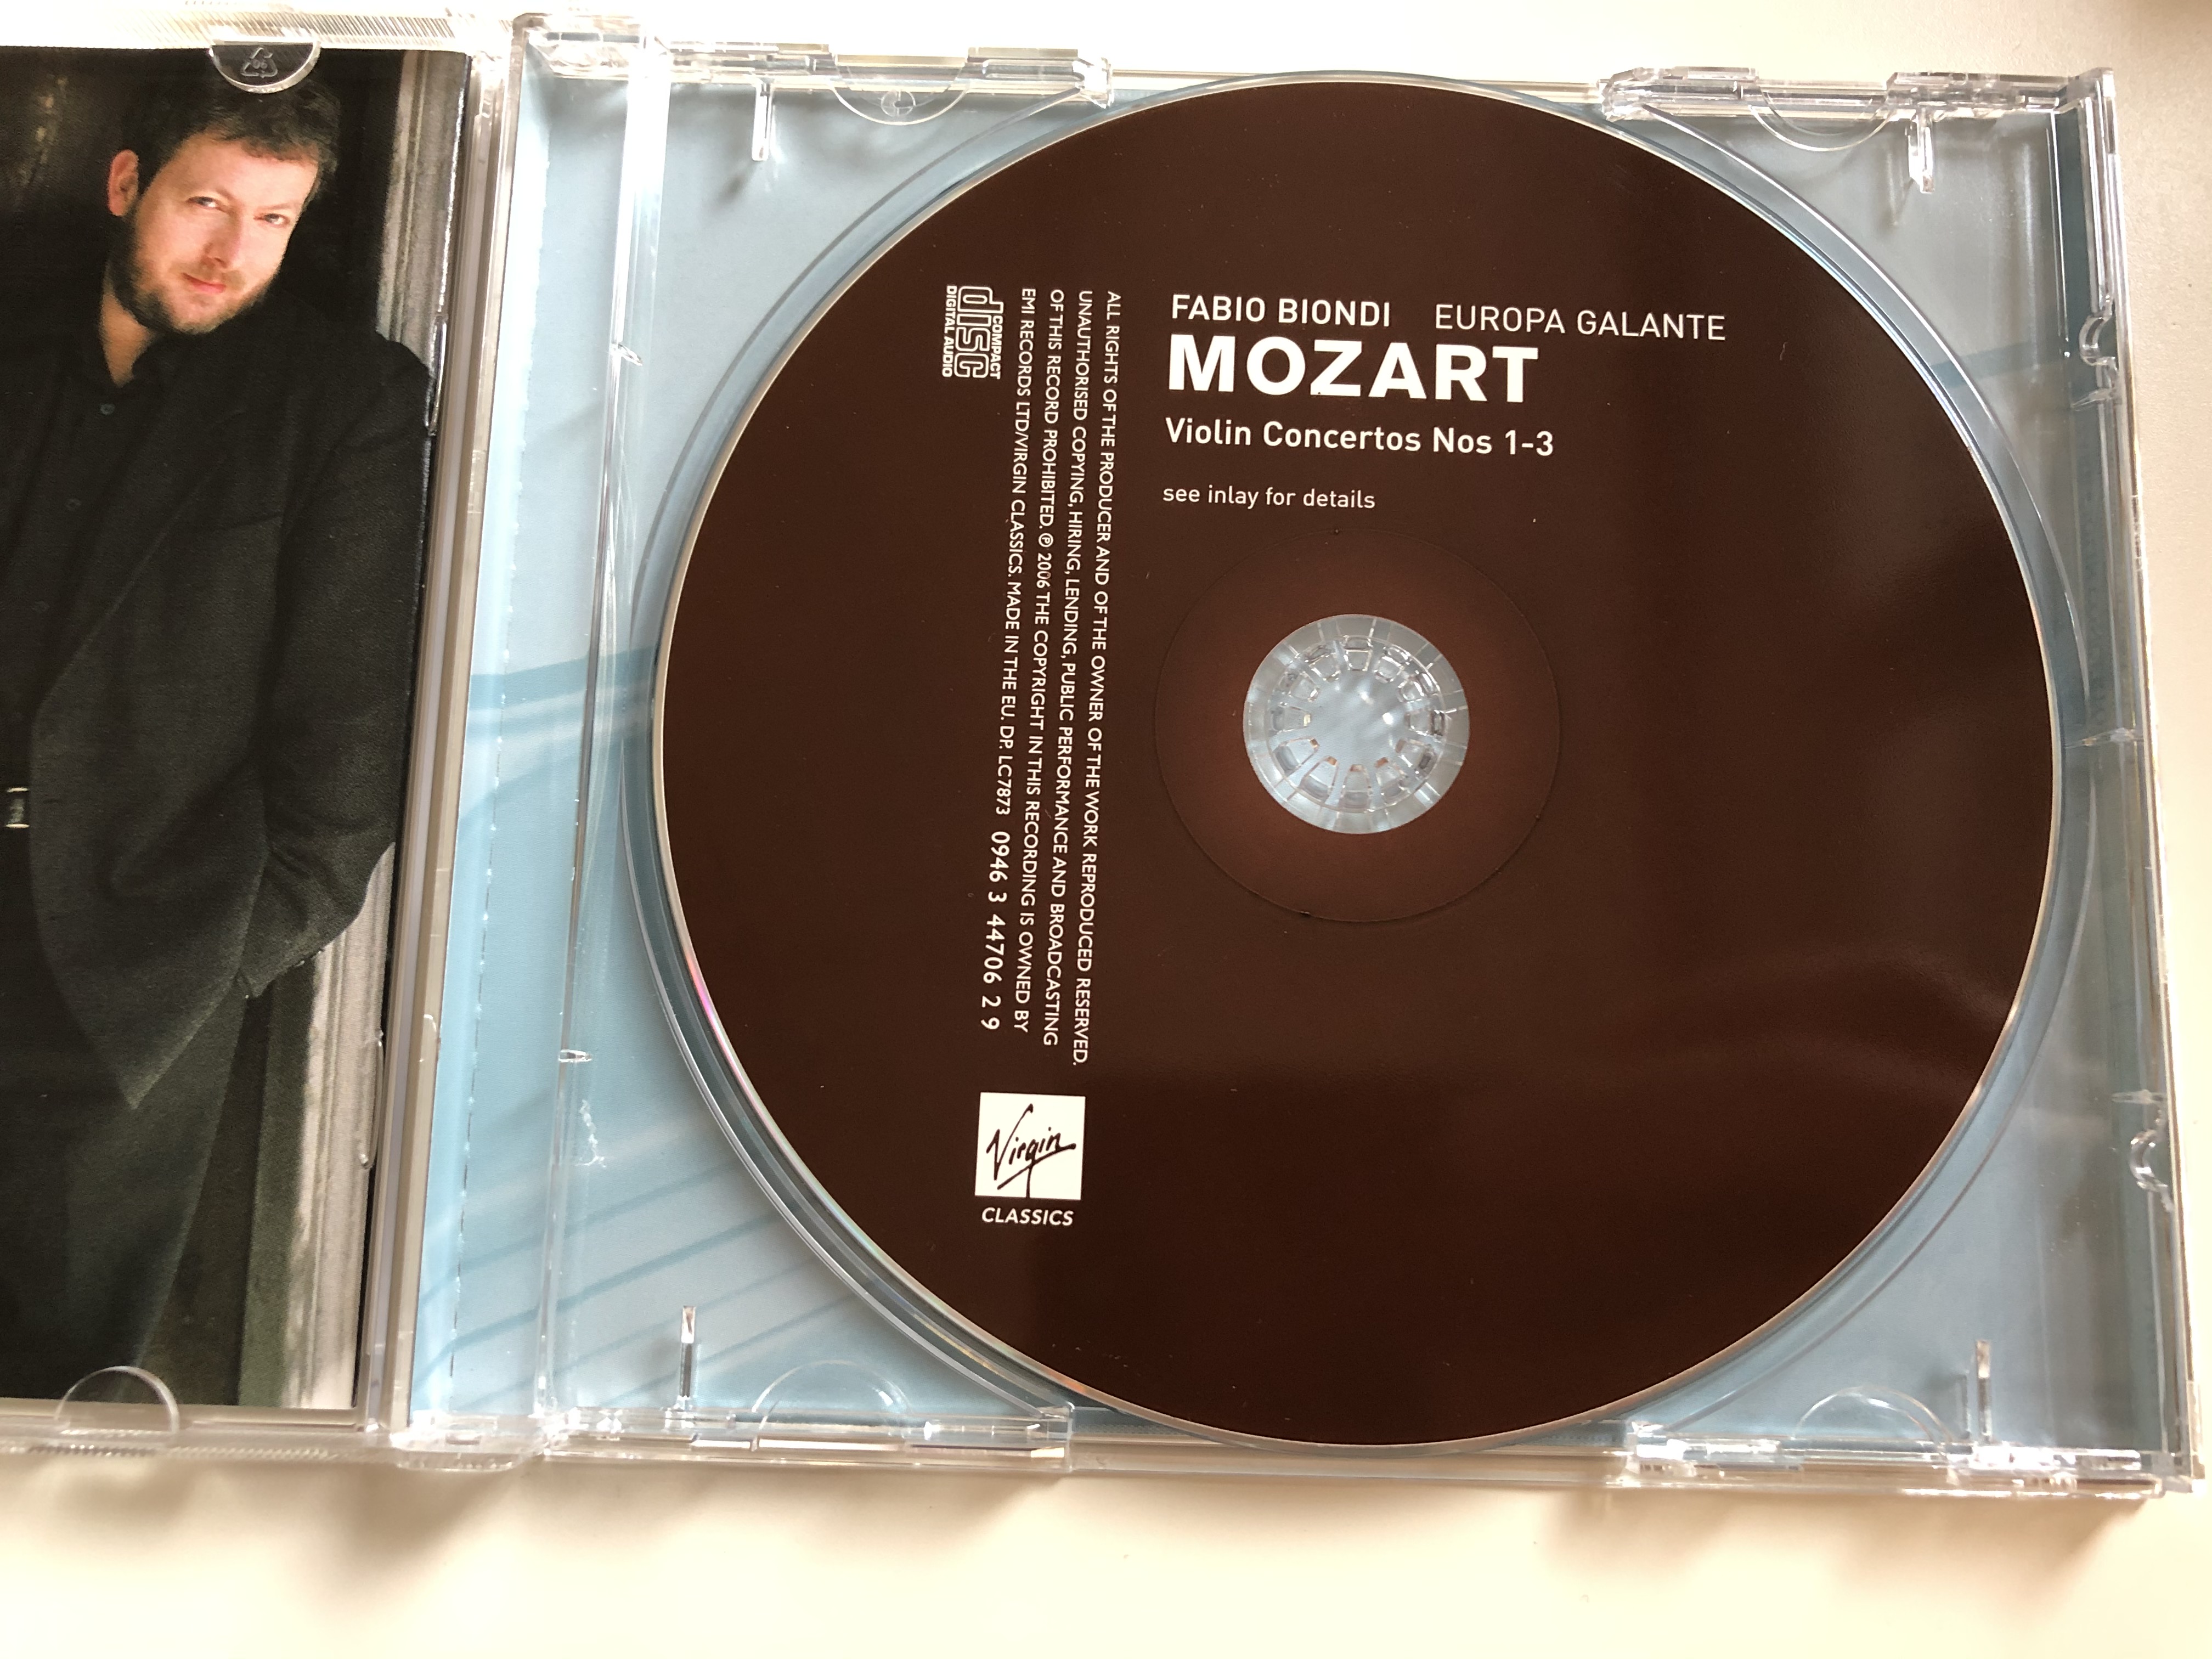 fabio-biondi-europa-galante-mozart-violin-concertos-nos.-1-3-virgin-classics-audio-cd-2006-0946-3-44706-2-9-9-.jpg